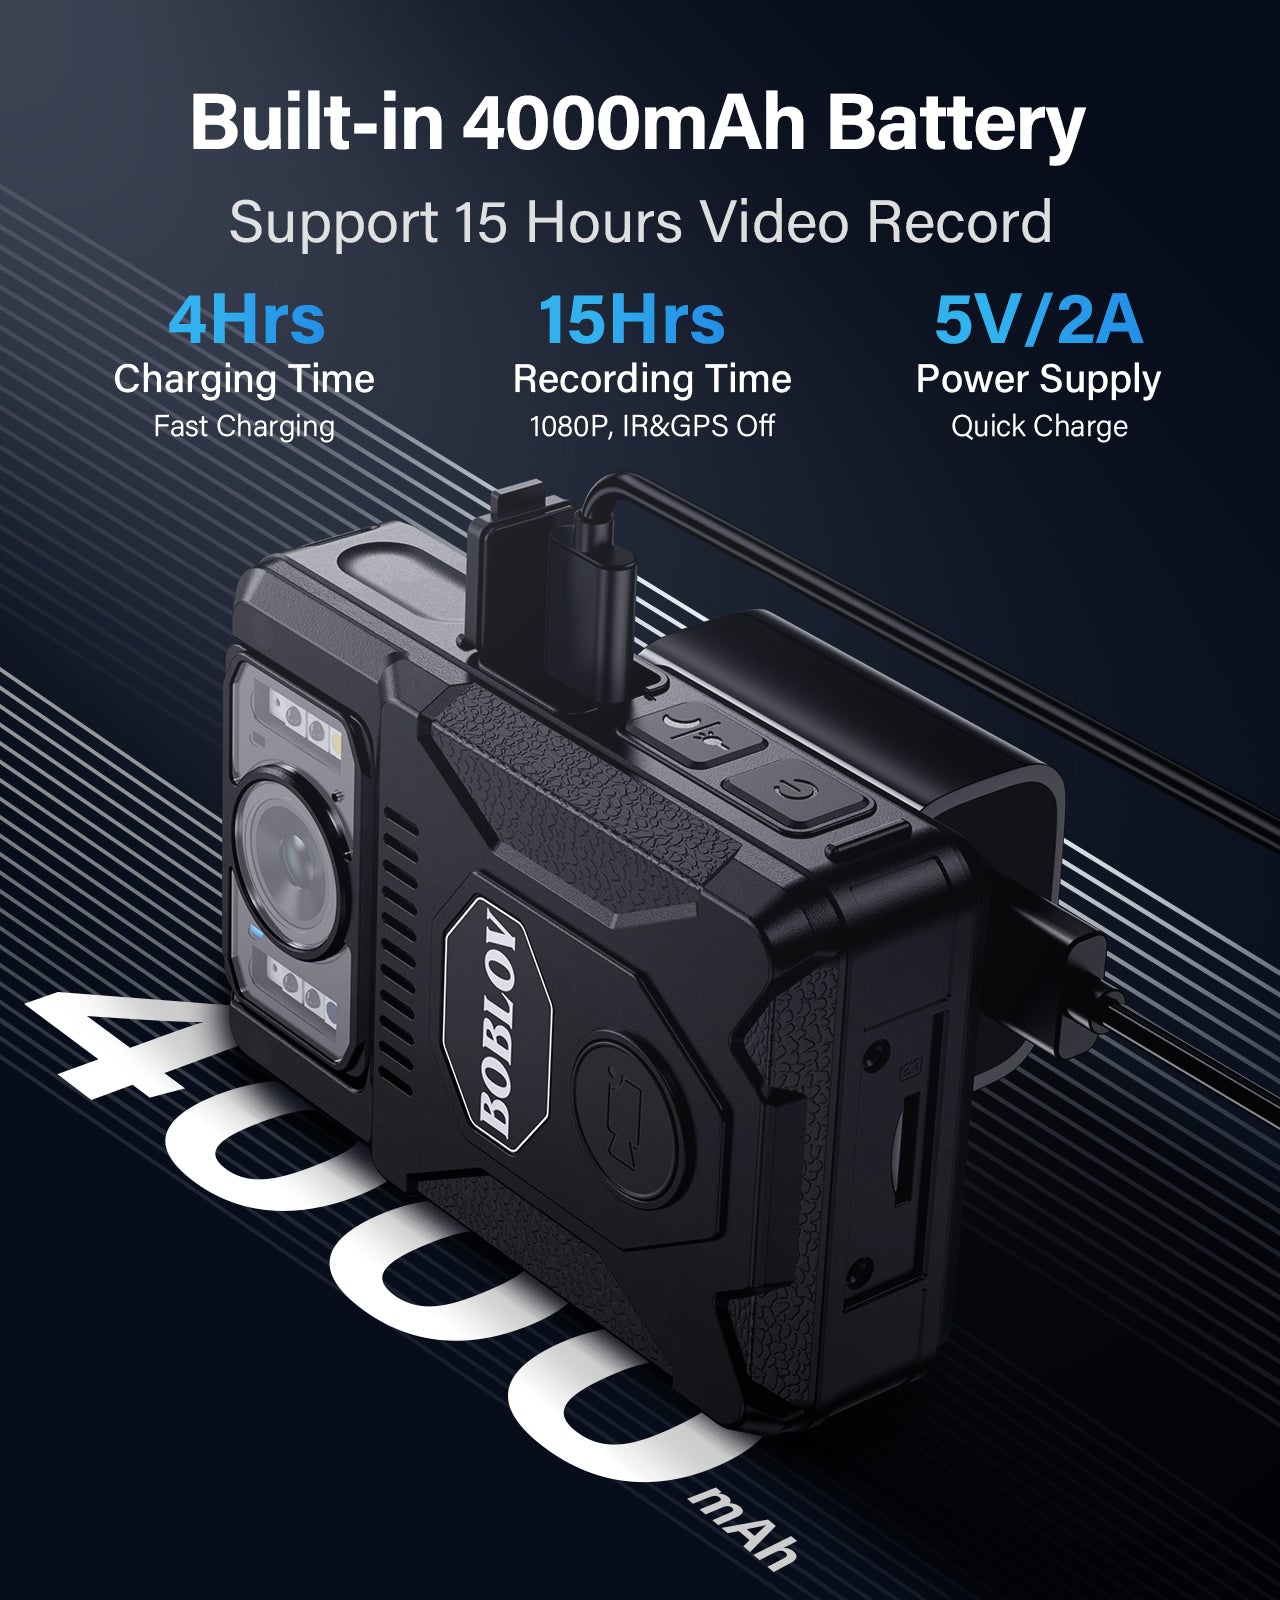 BOBLOV M7 128GB GPS Body Camera, 180° Rotate BodyCam, 13-15 Hrs Recording, Type-C Port, Quick Charging